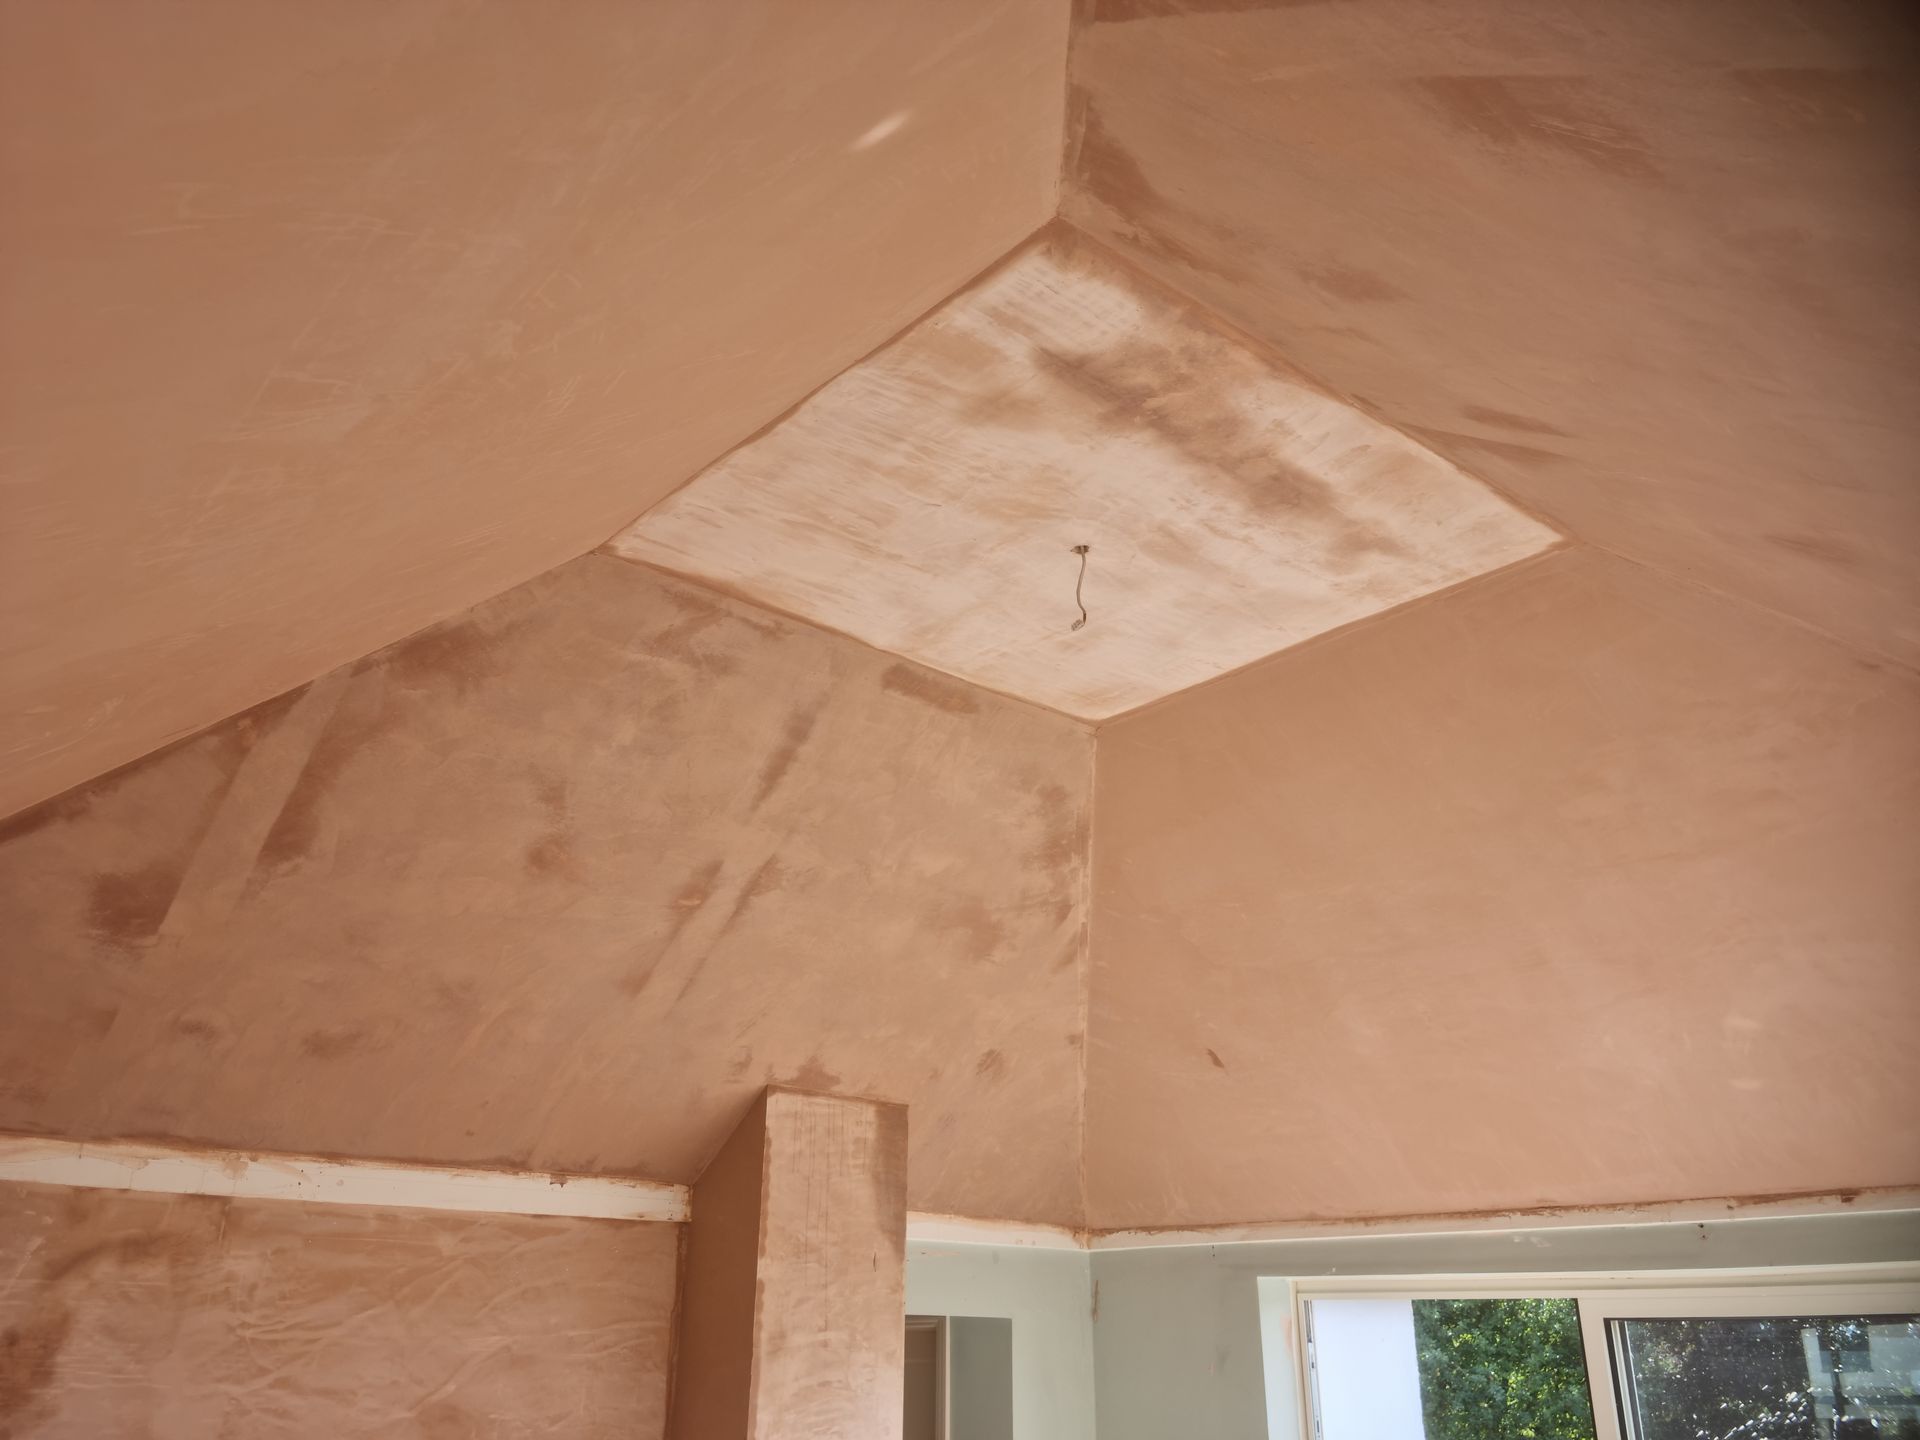 Ceiling plasterer, intricate ceiling plastering 